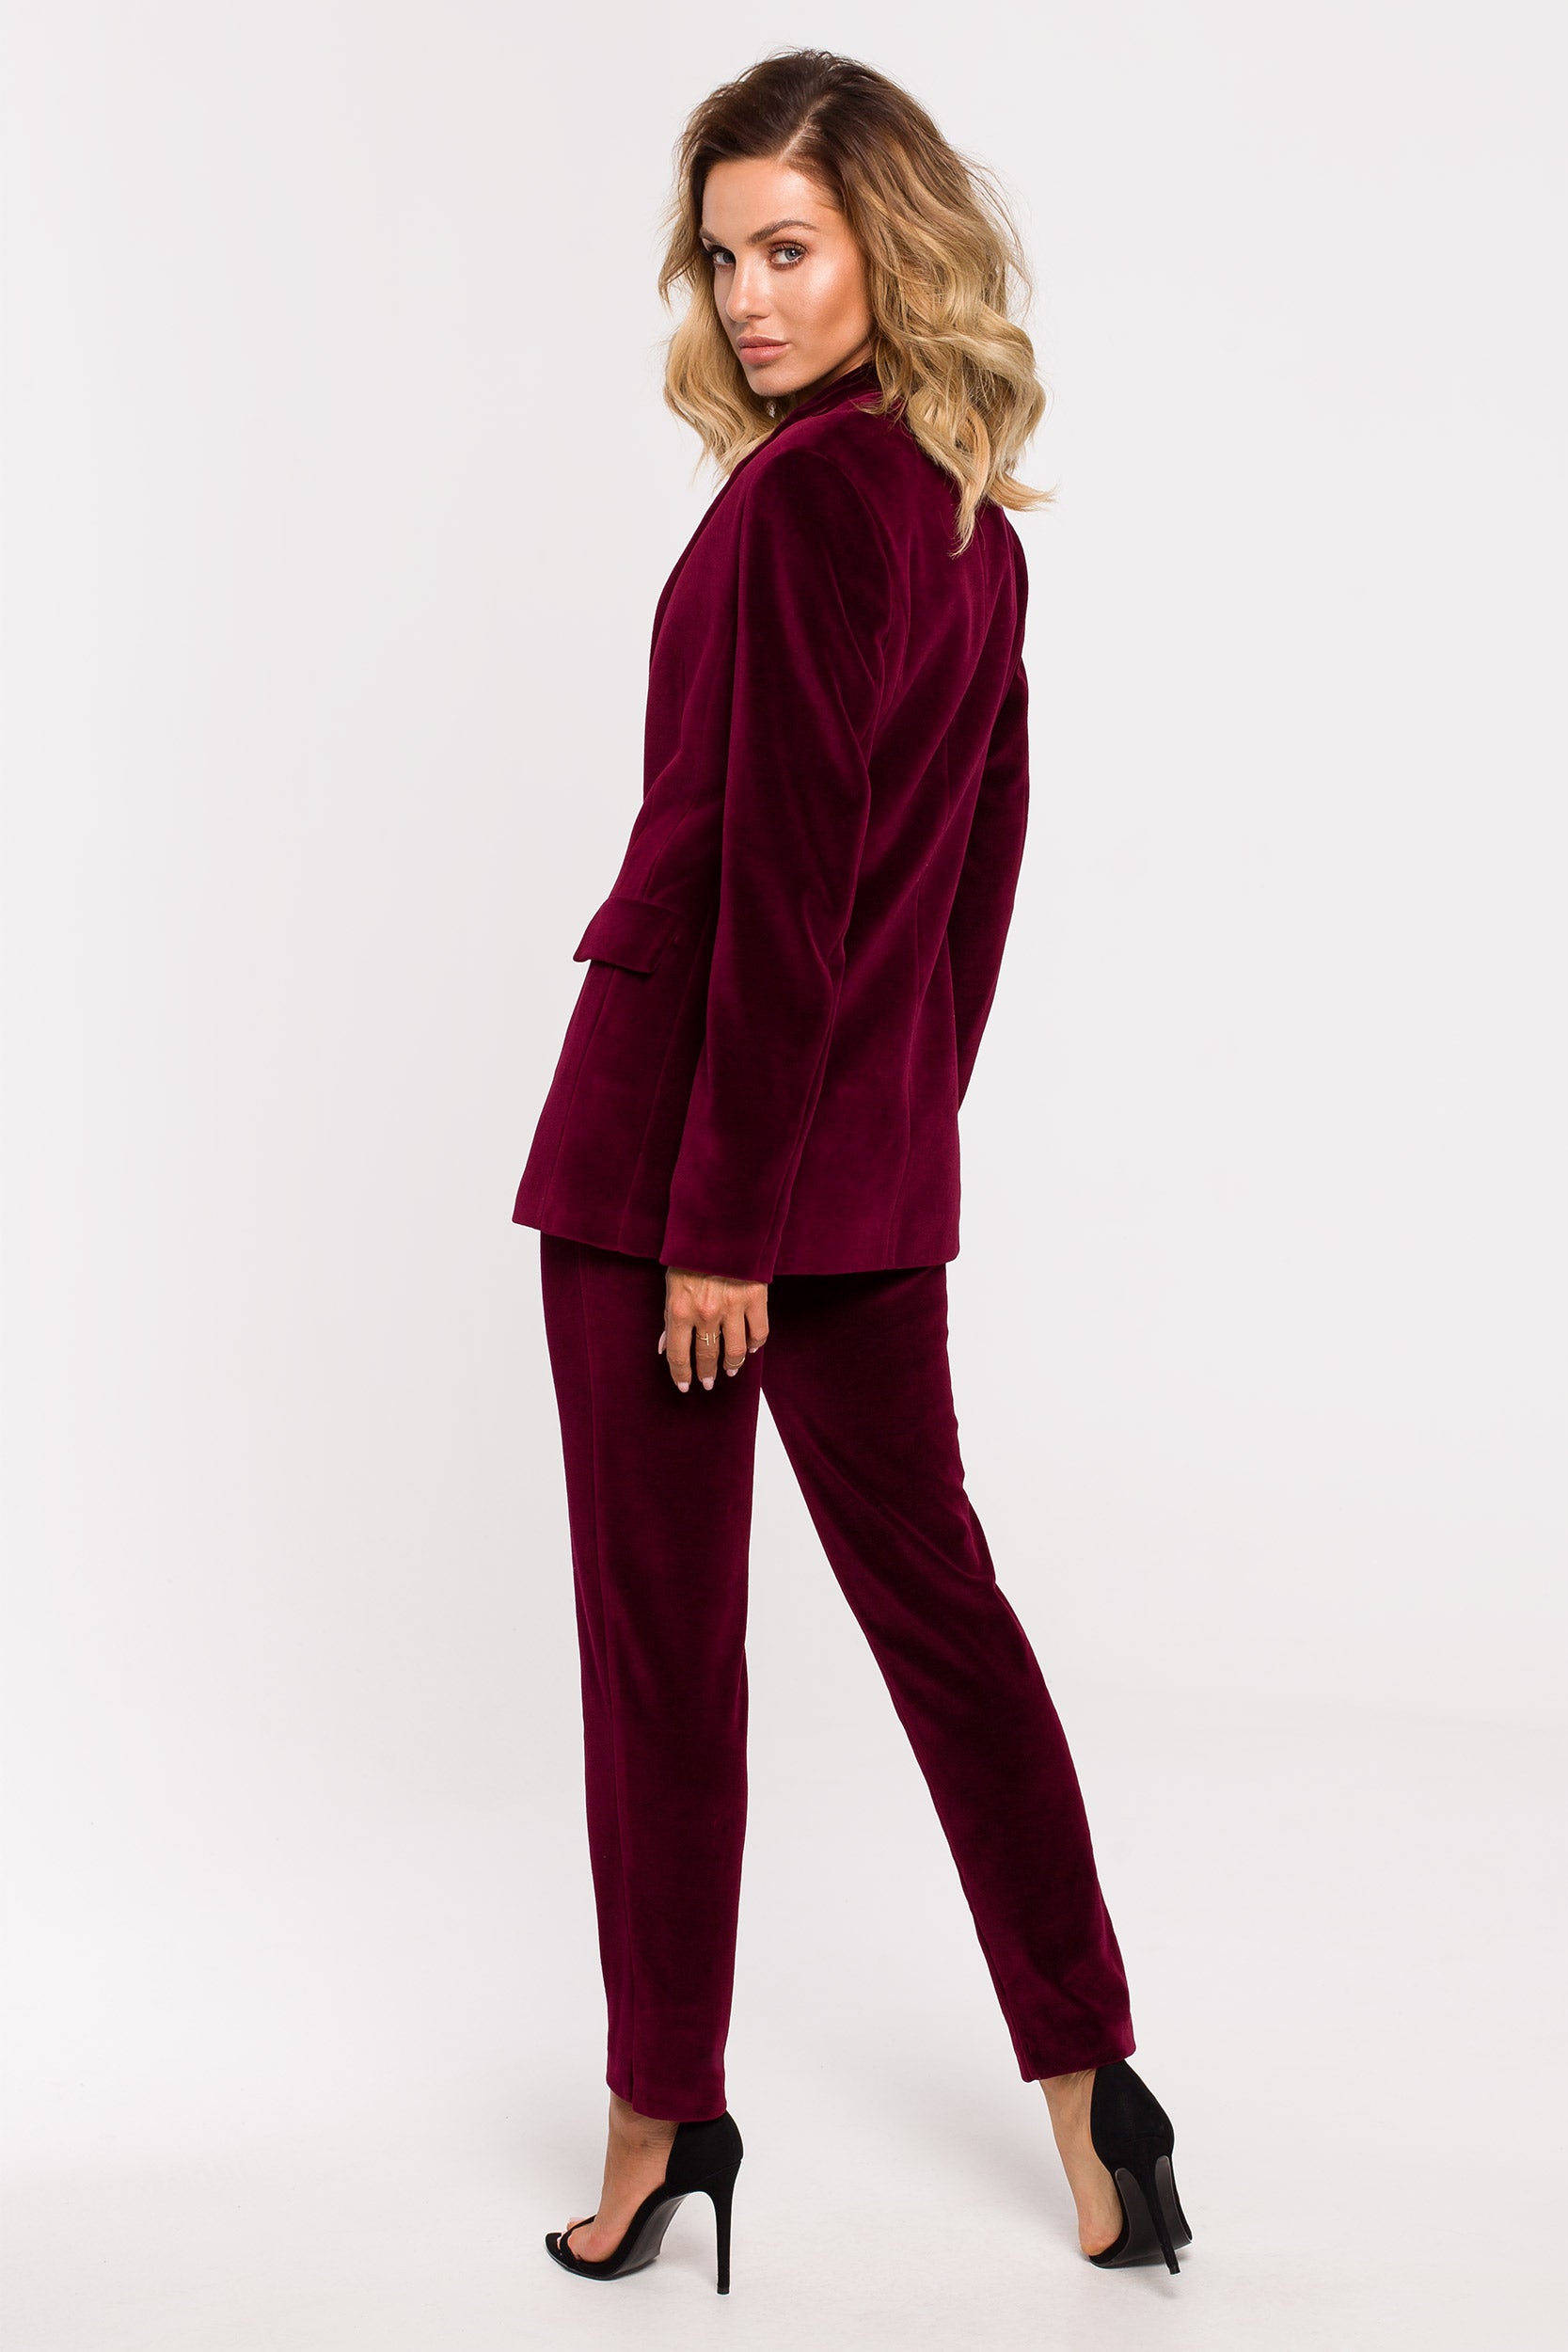 Velvet Burgundy Women Pantsuits Autumn 2 Buttons Blazer+ Wide Zipper Long  Pants Officer Lady Trousers Suits - AliExpress